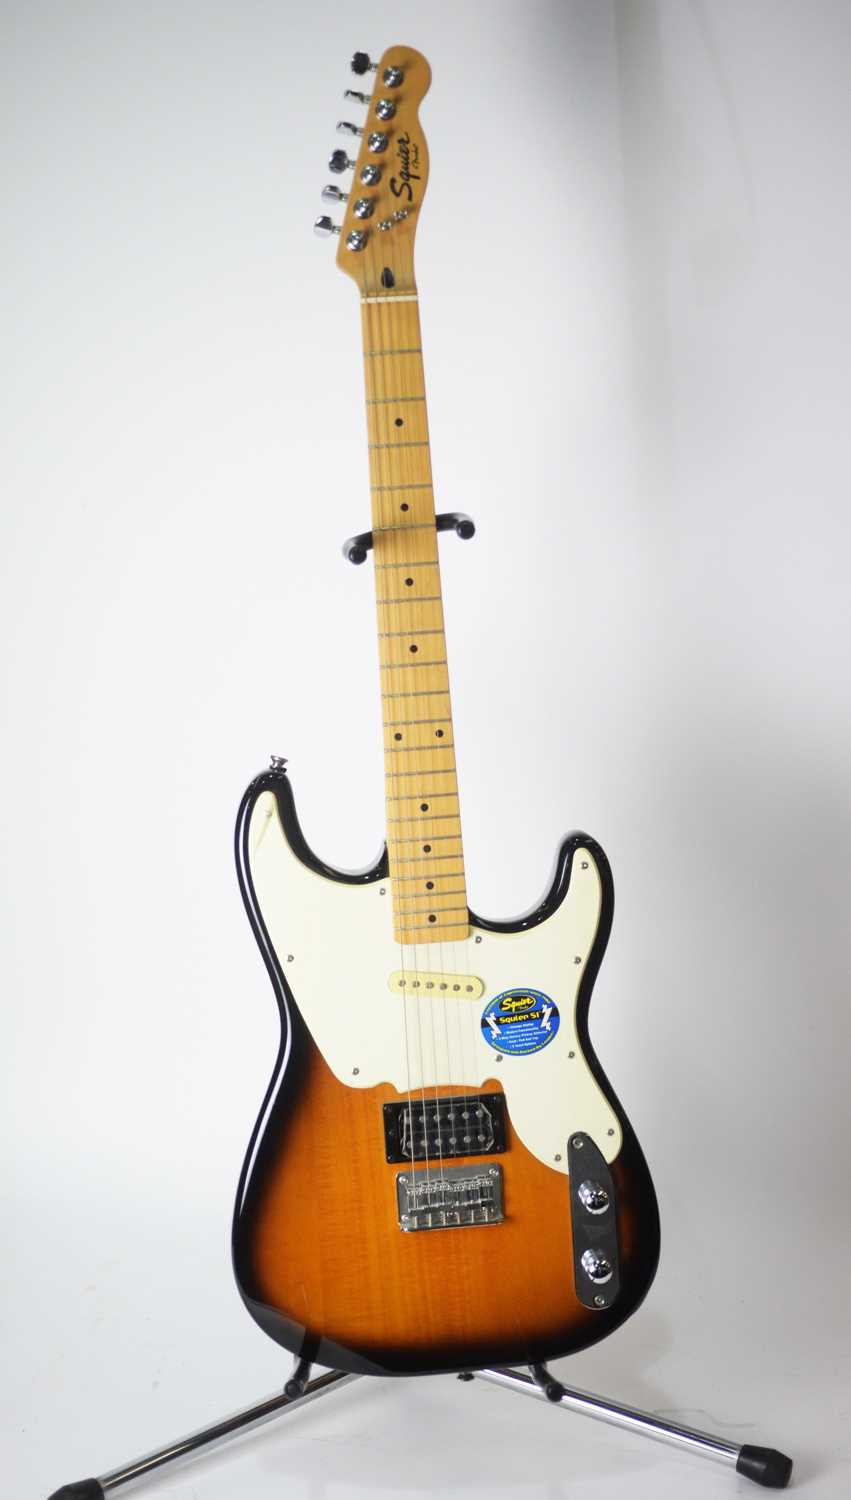 Lot 744 - Fender Squier 51 electric guitar